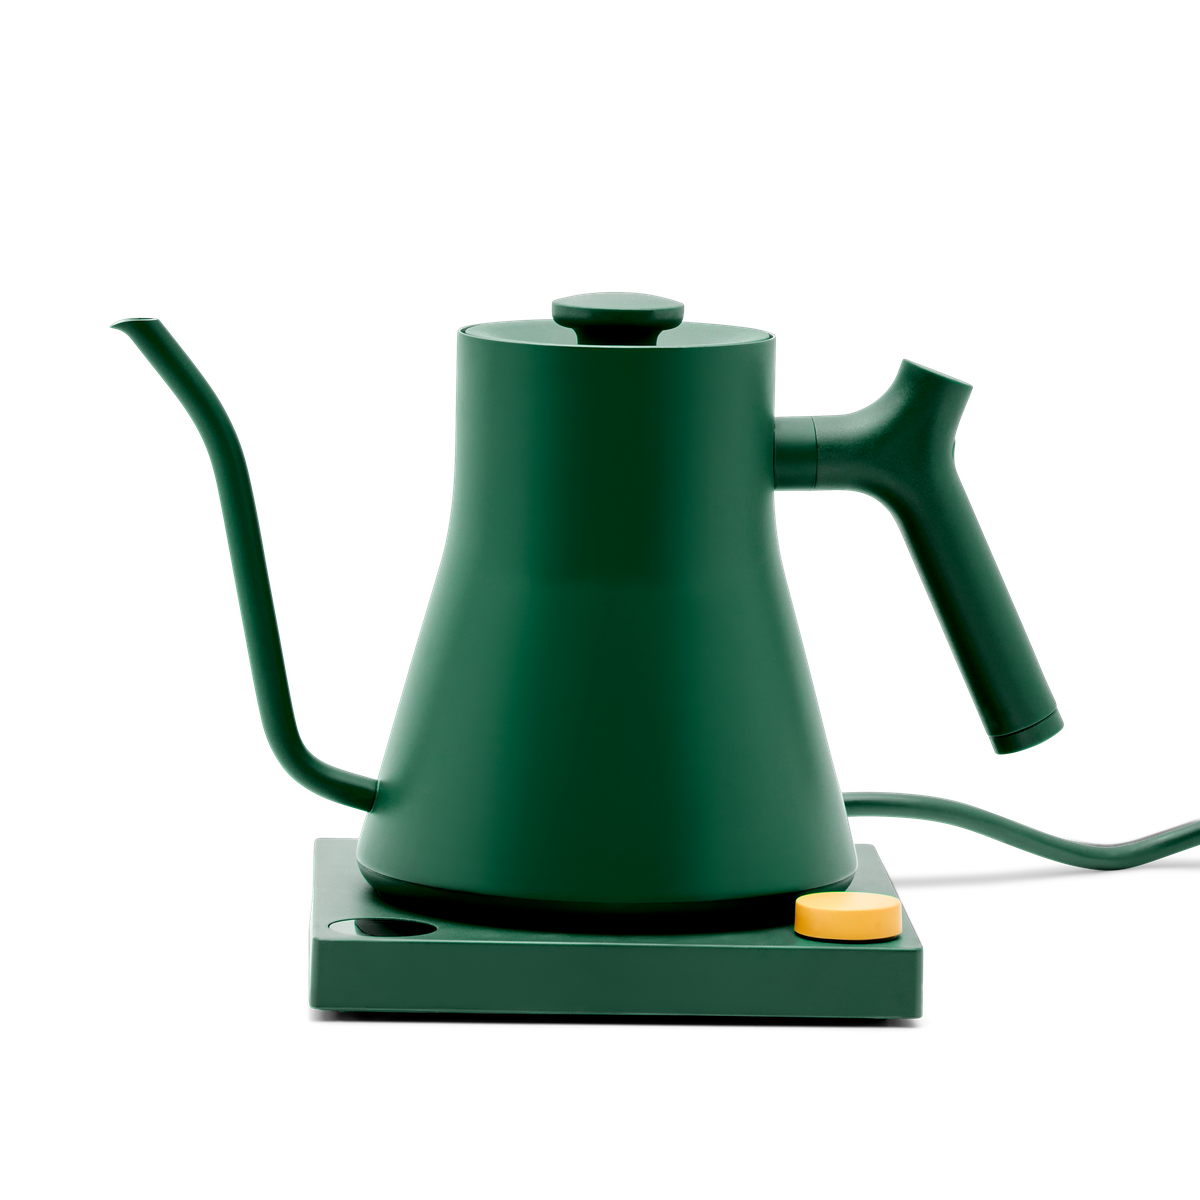 A green goose neck kettle